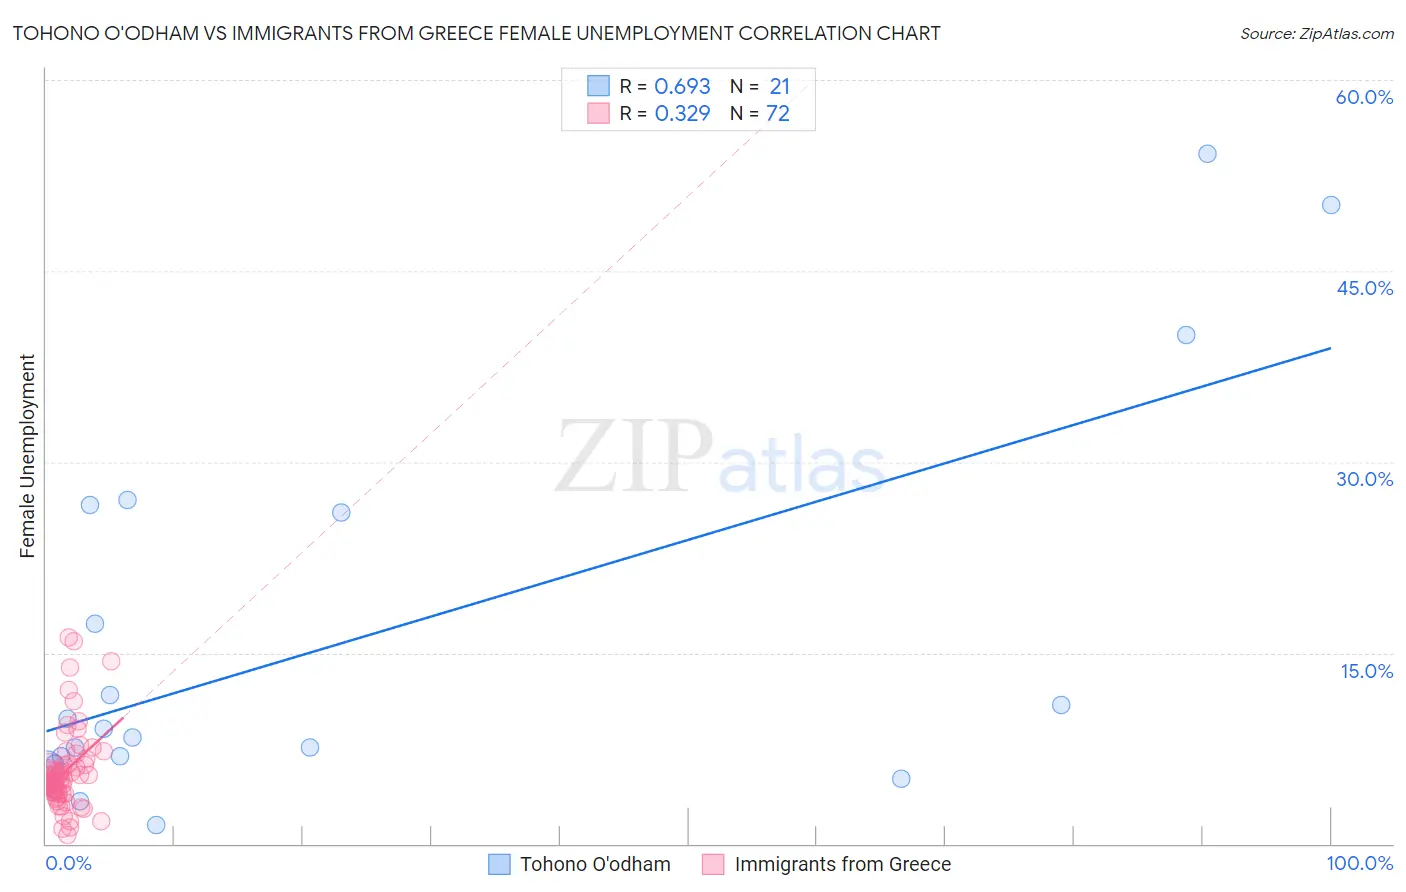 Tohono O'odham vs Immigrants from Greece Female Unemployment